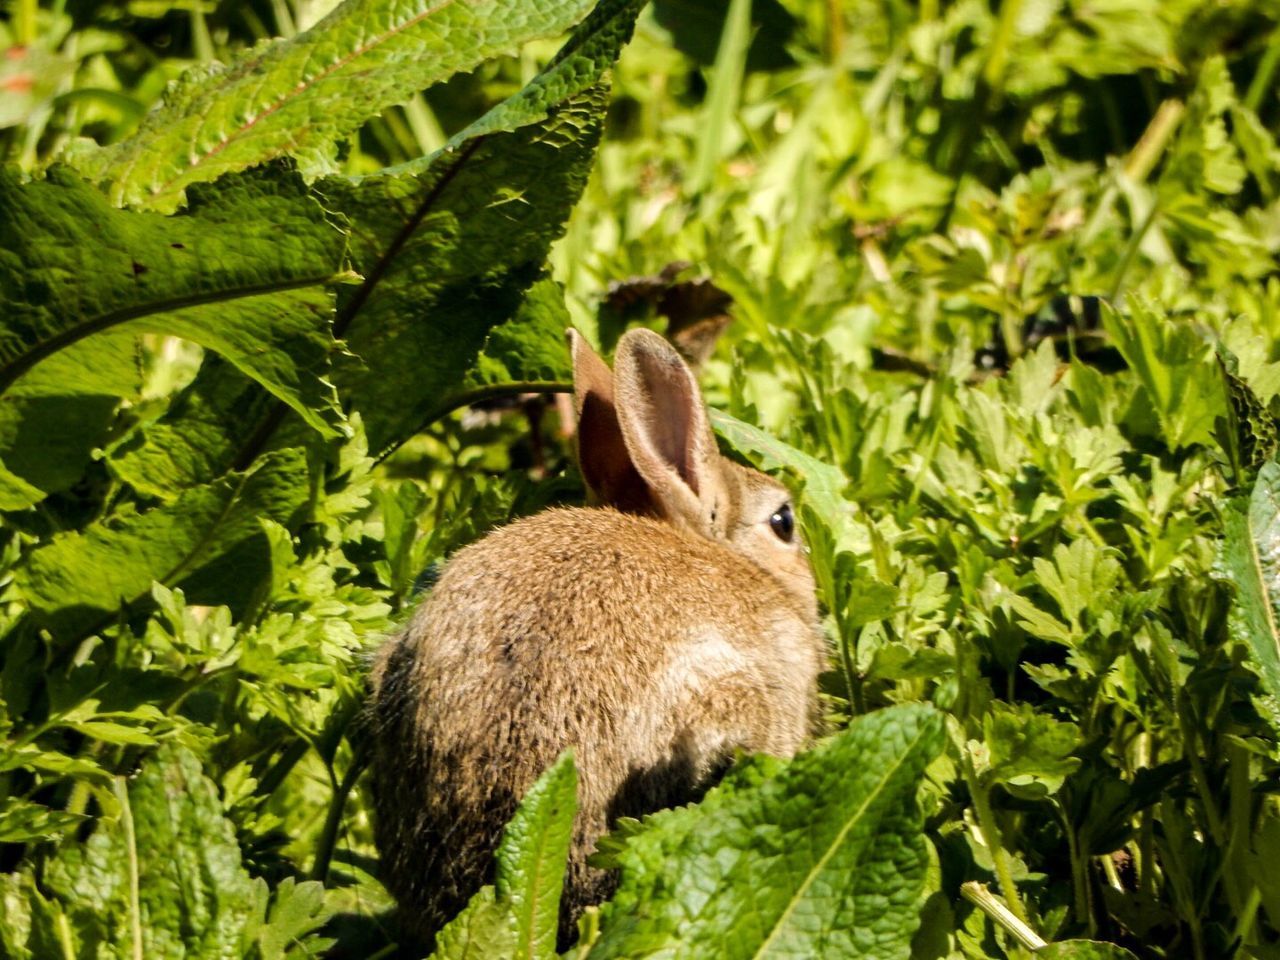 Close-up of rabbit amidst plants